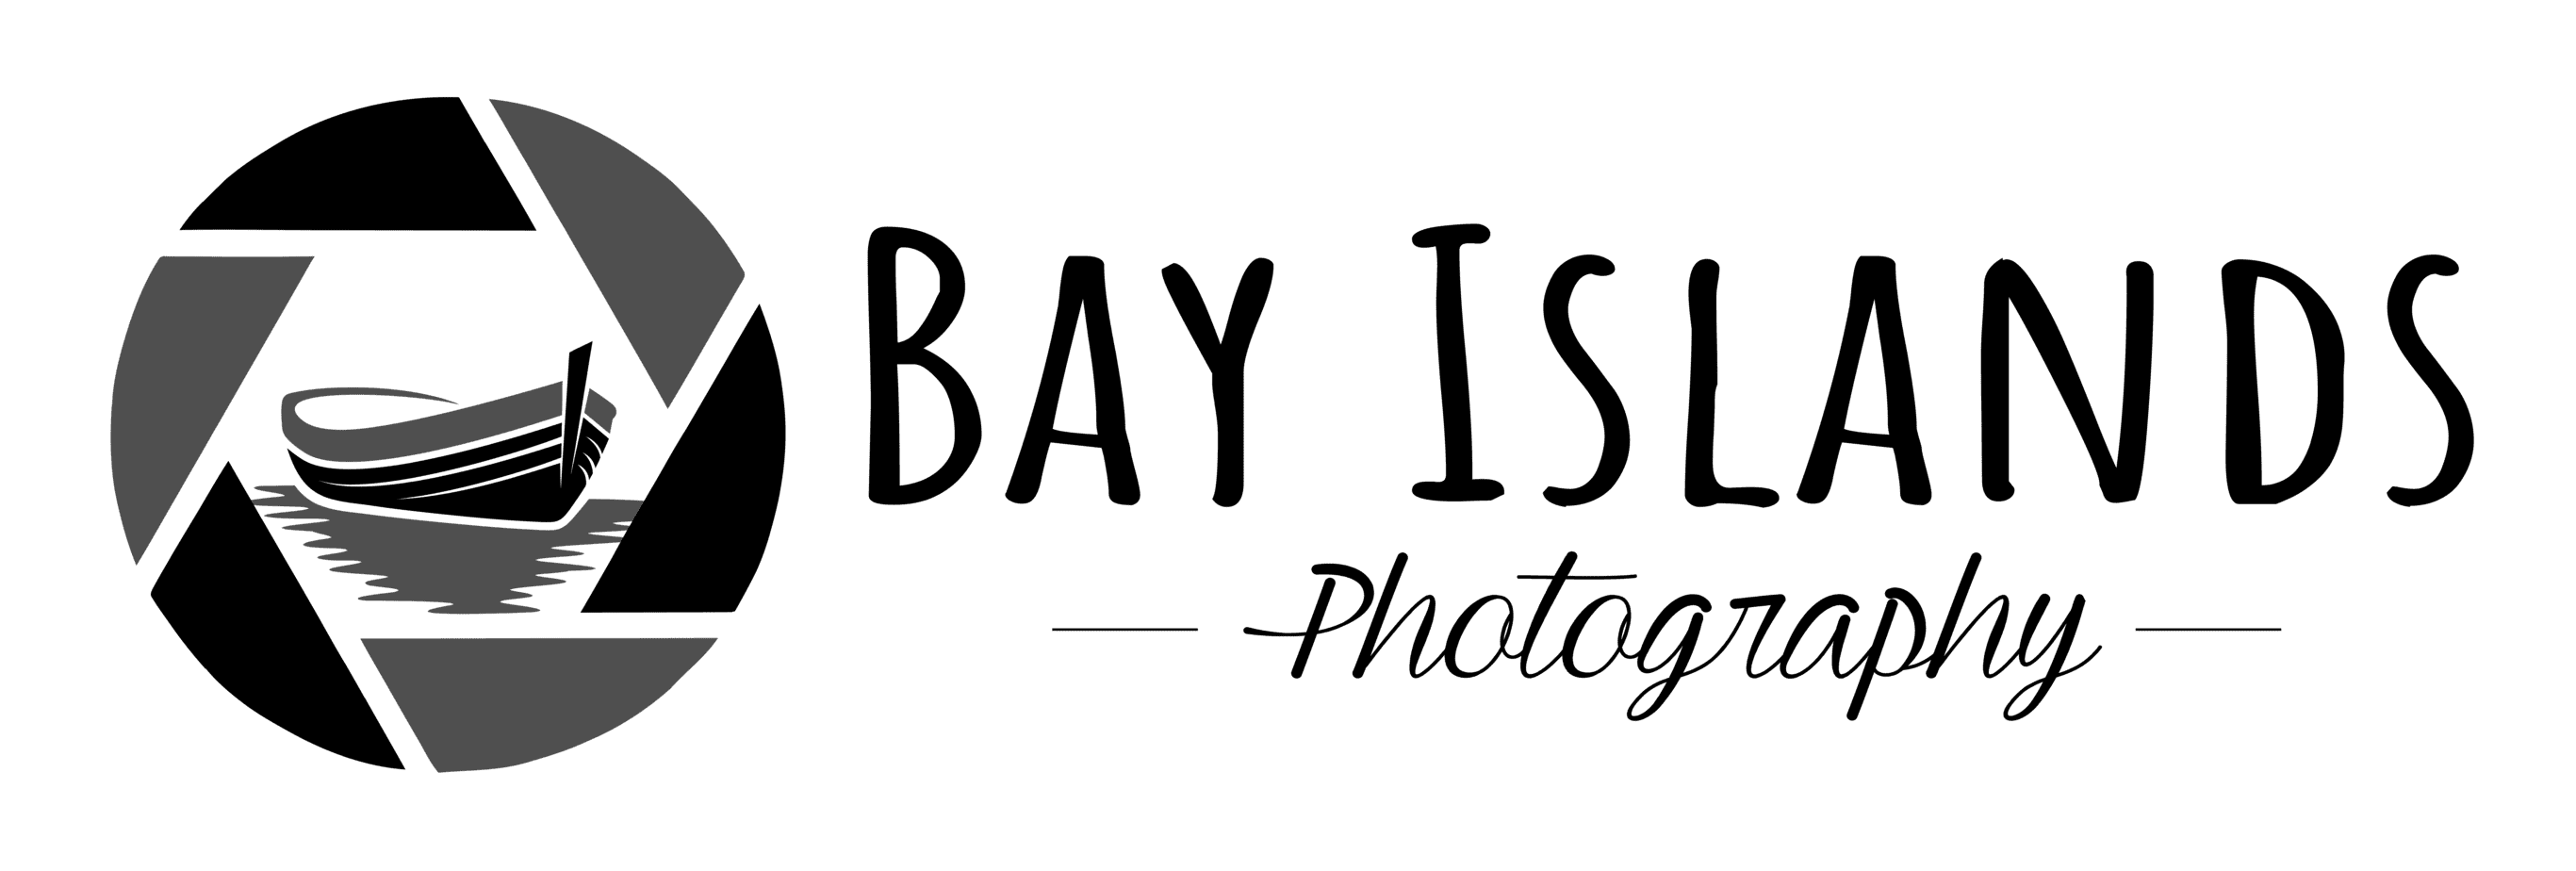 Bay Islands Photography